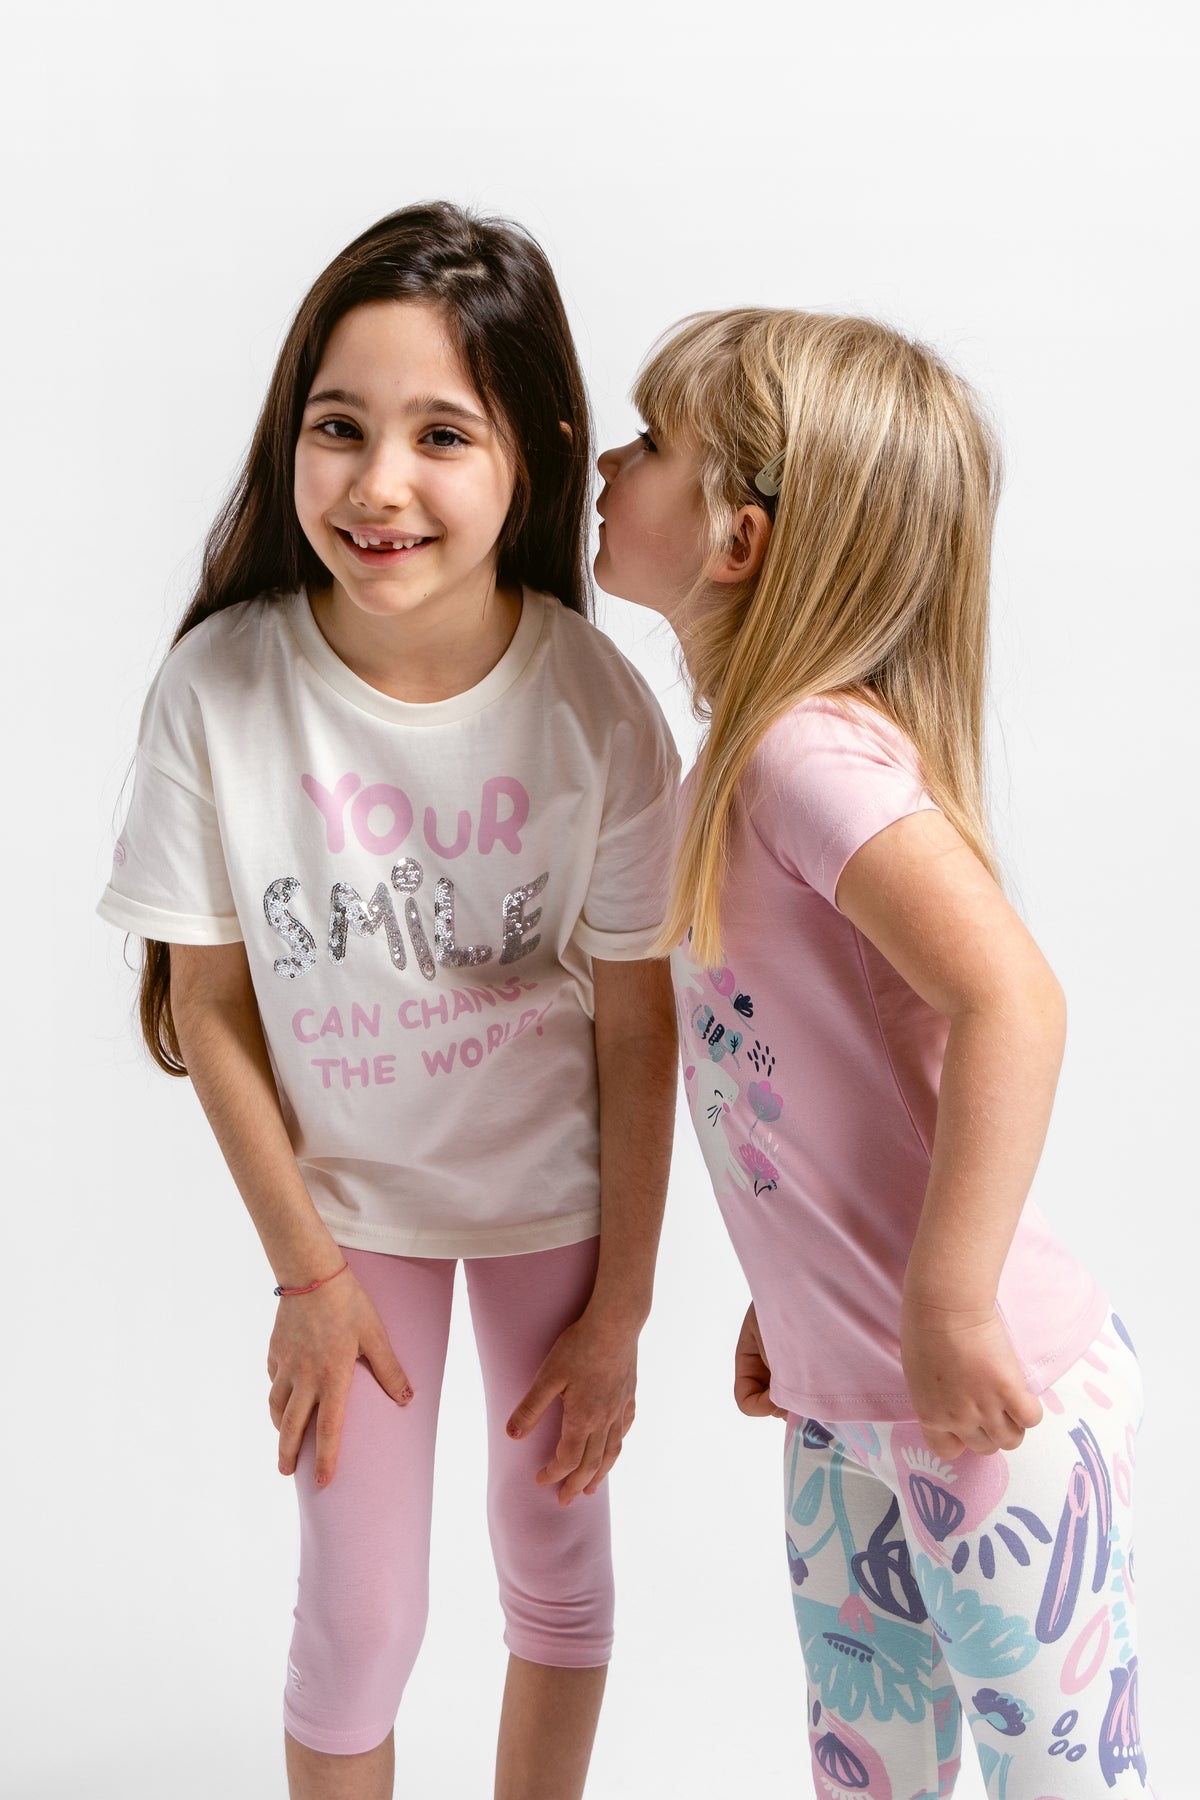 Toddler Girls' Polka Dots Short Sleeve T-Shirt - Cat & Jack™ Pink 3T